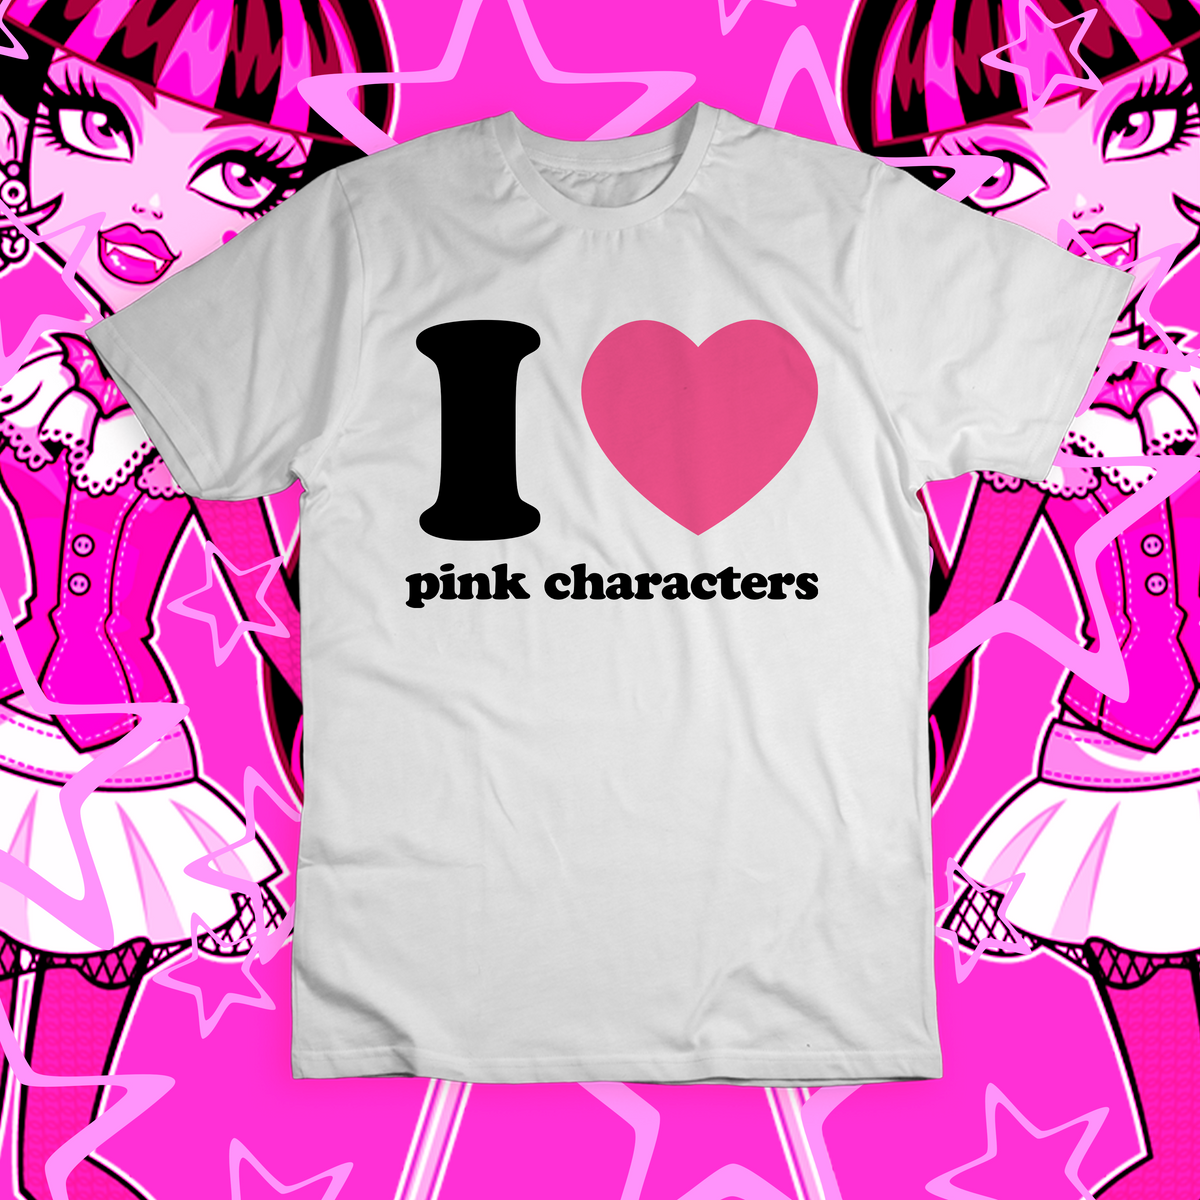 Nome do produto: Camiseta \'I LOVE PINK CHARACTERS\'